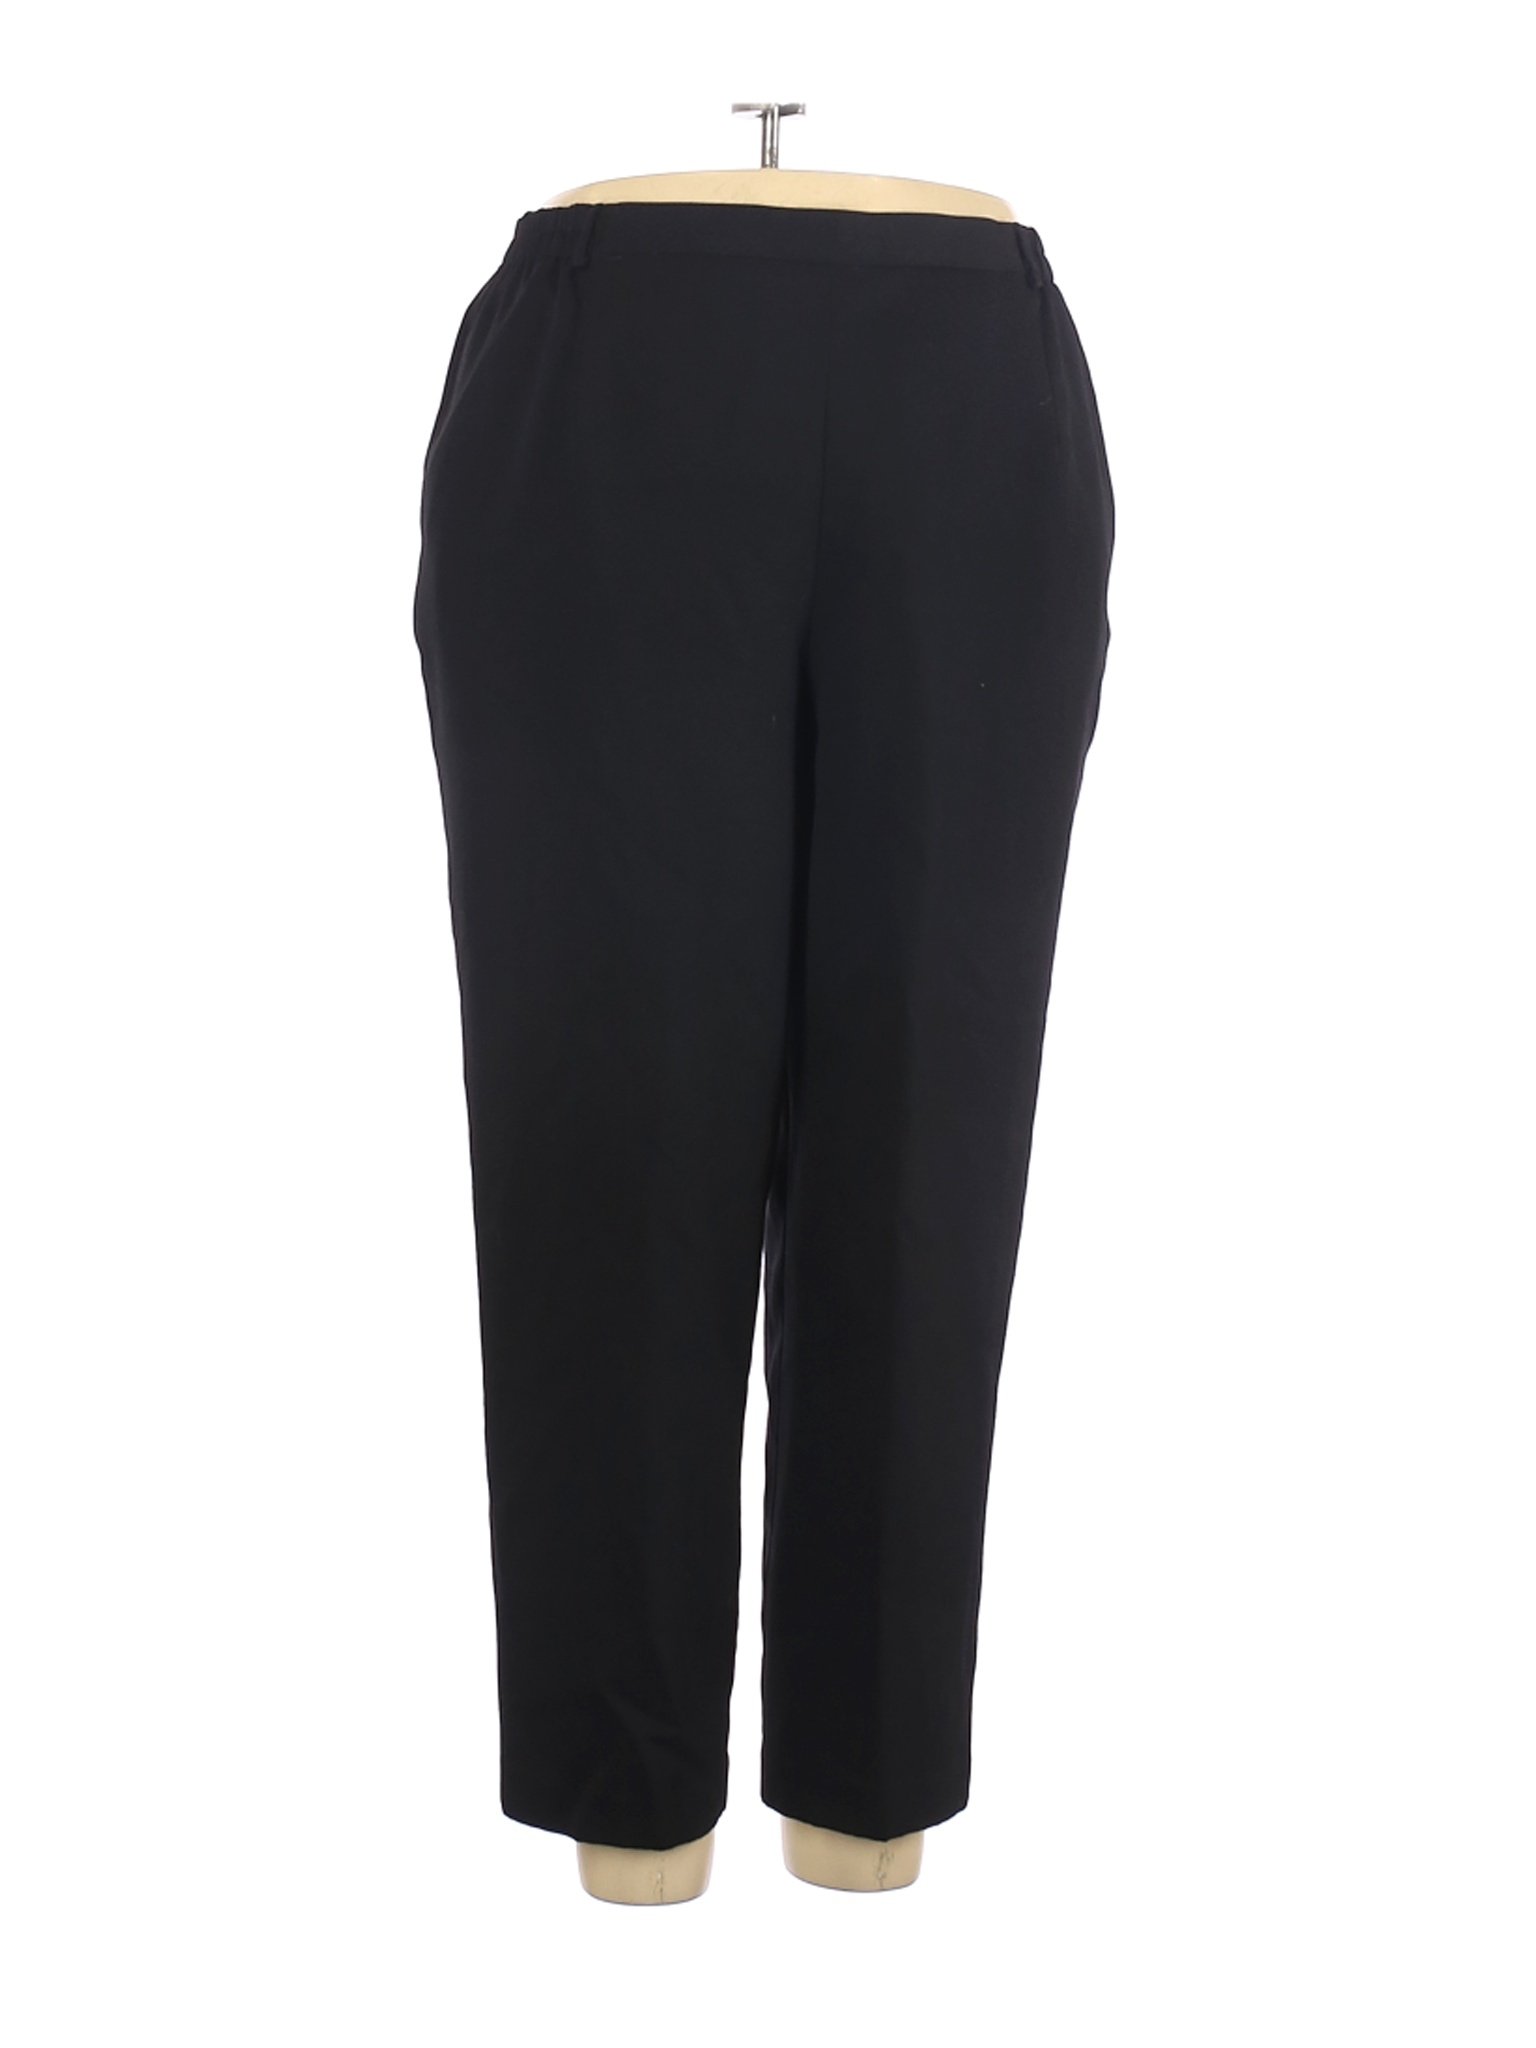 Koret Women Black Casual Pants 22 Plus | eBay